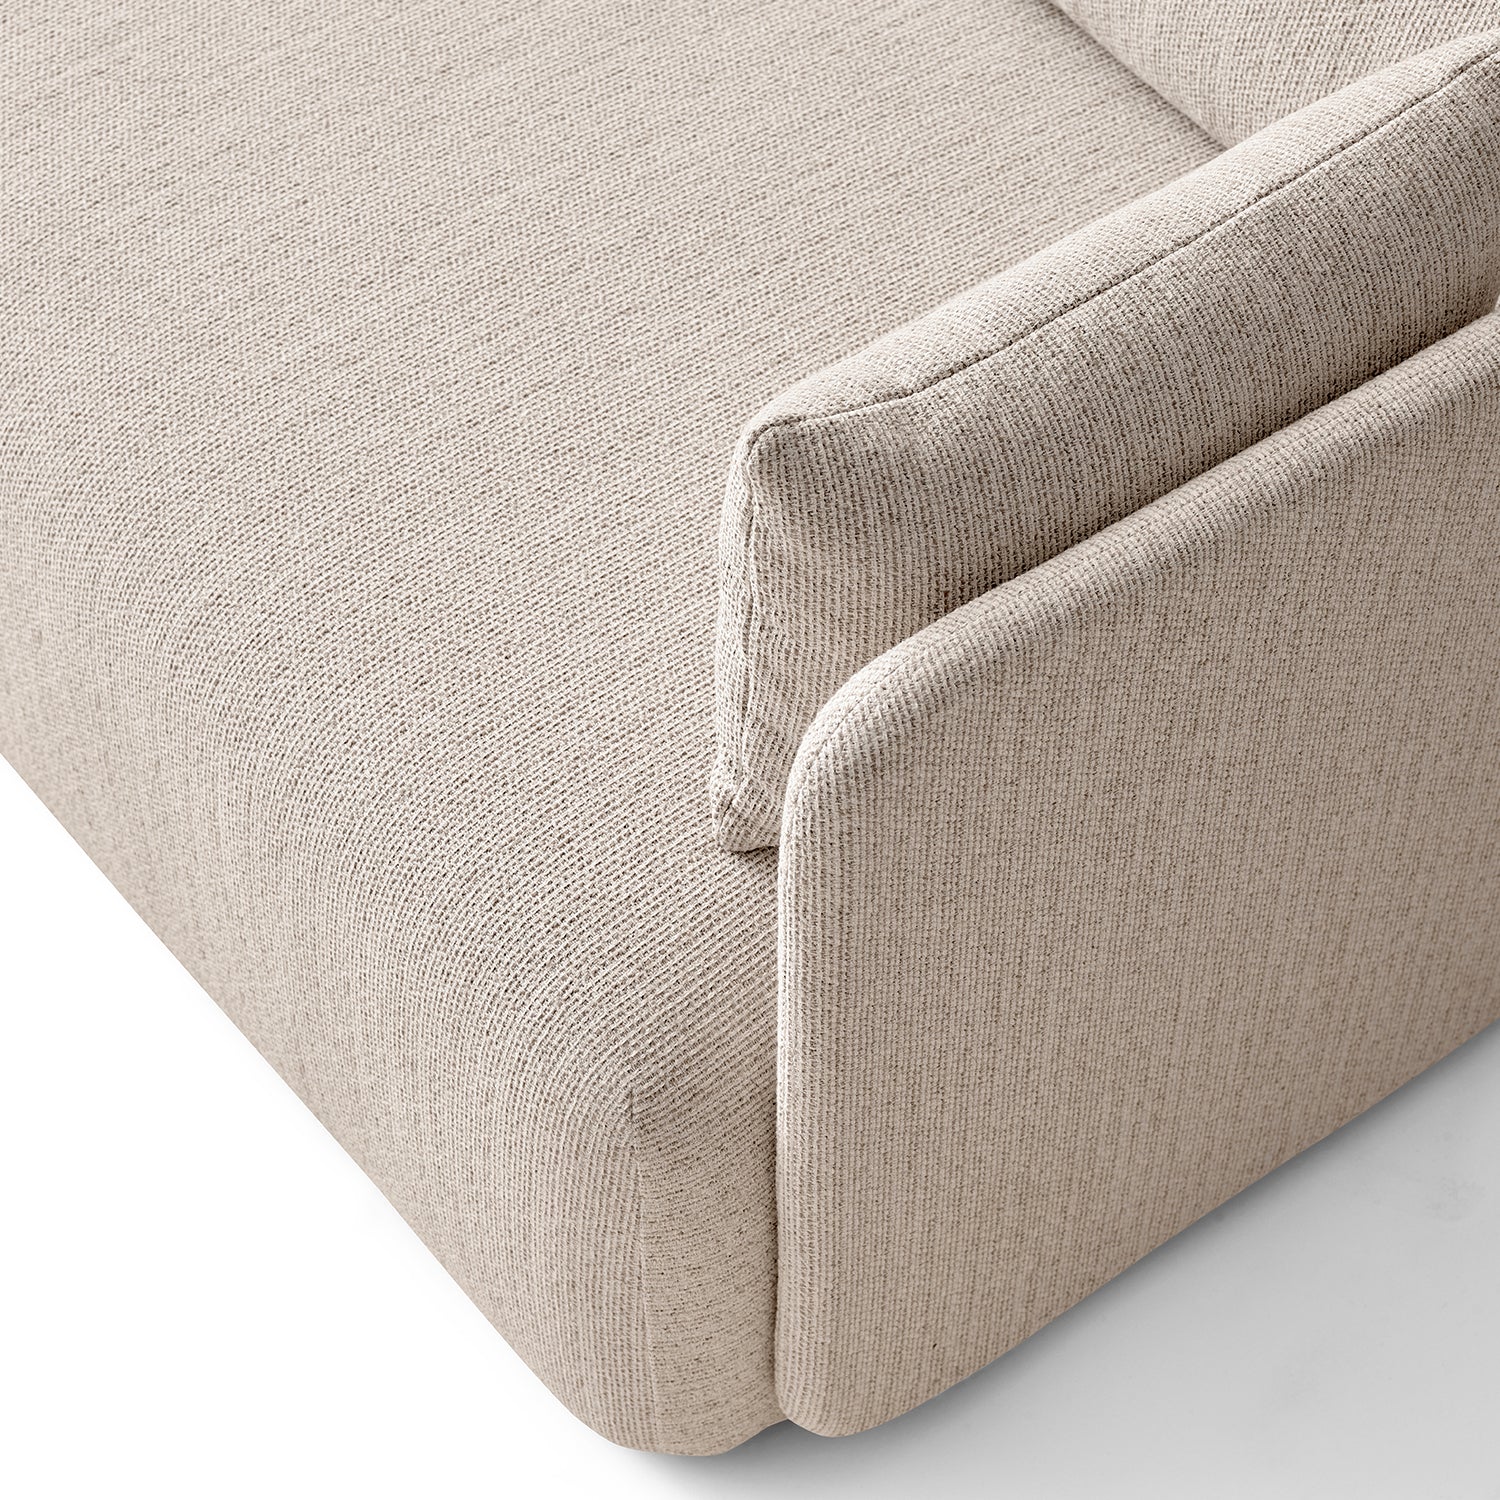 Offset 3 Seater Sofa - The Design Choice